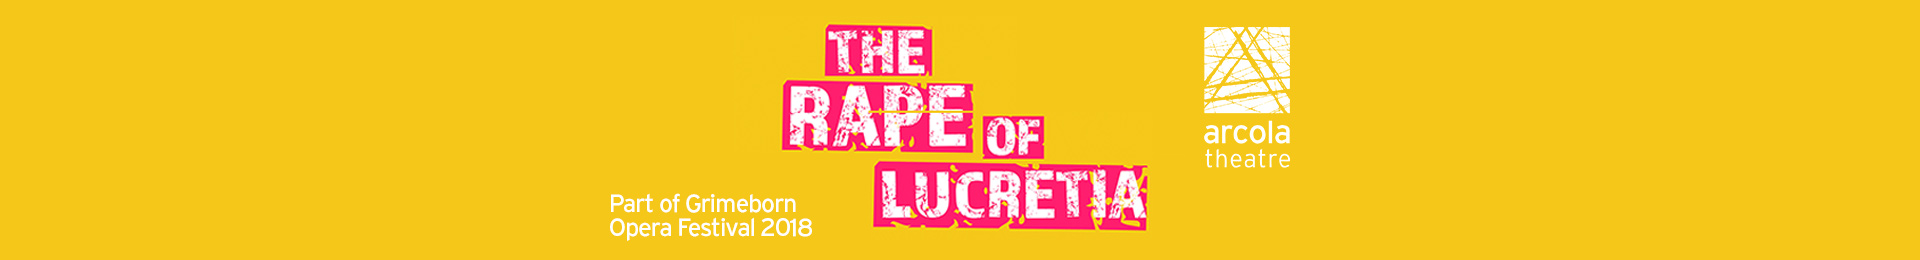 The Rape of Lucretia tickets at the Arcola Theatre